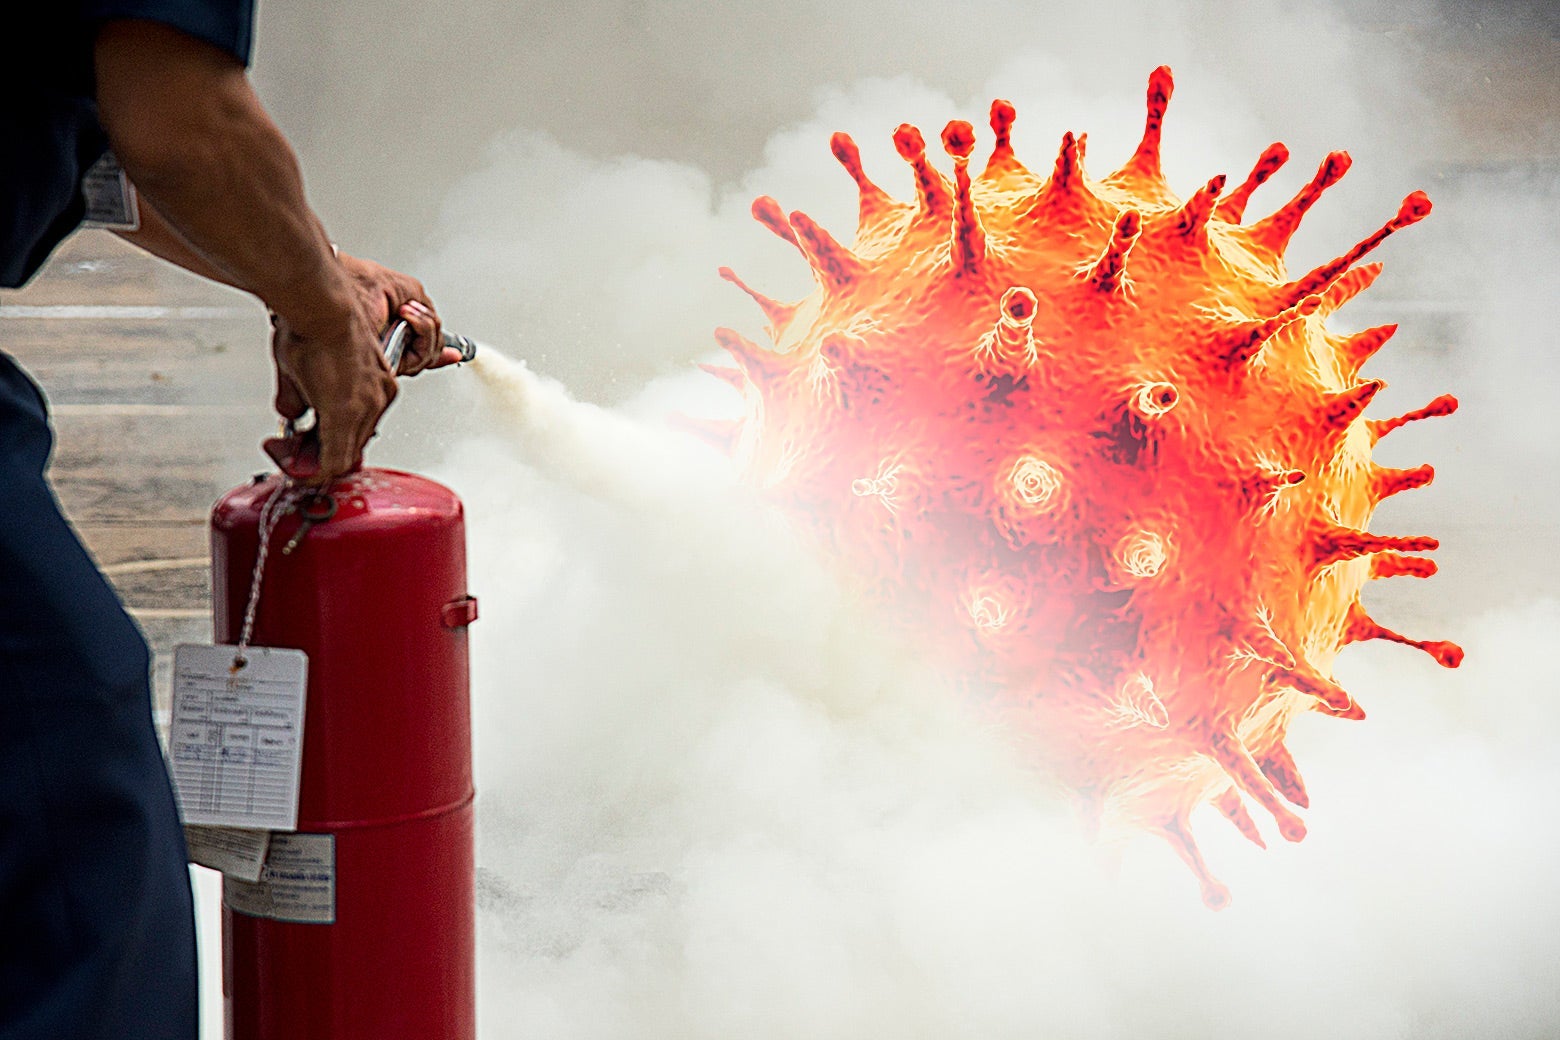 A man spraying a fire extinguisher onto a COVID-19 germ.